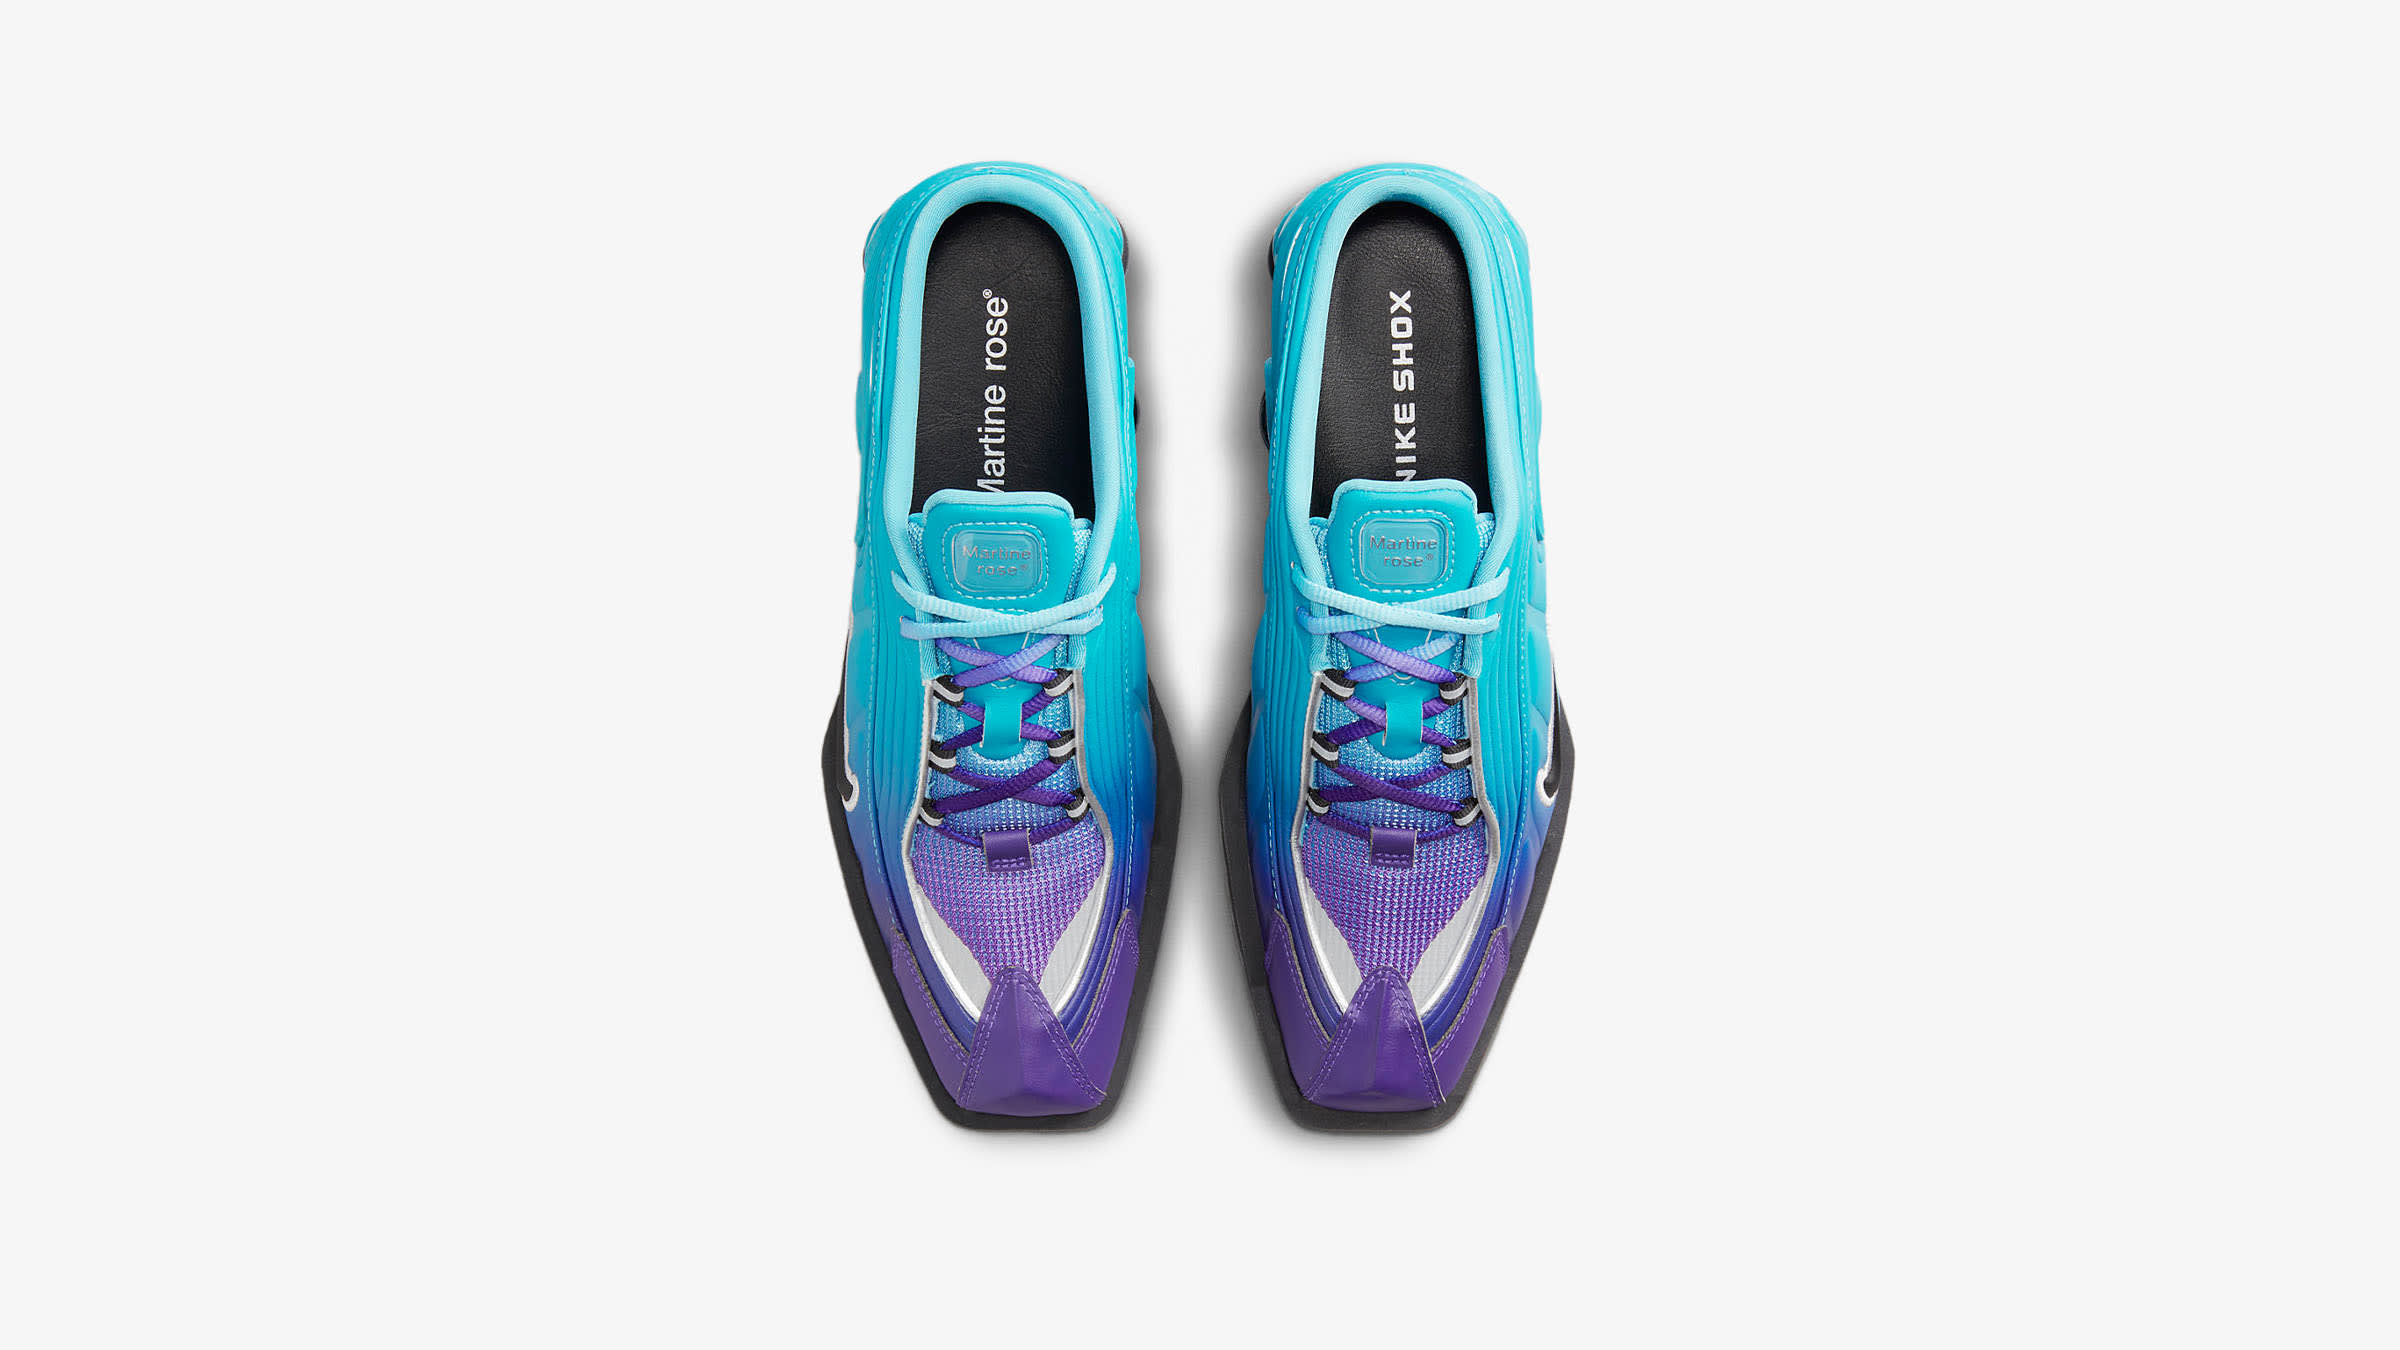 Nike x Martine Rose Shox MR4 (Blue, Black & Silver) | END. Launches